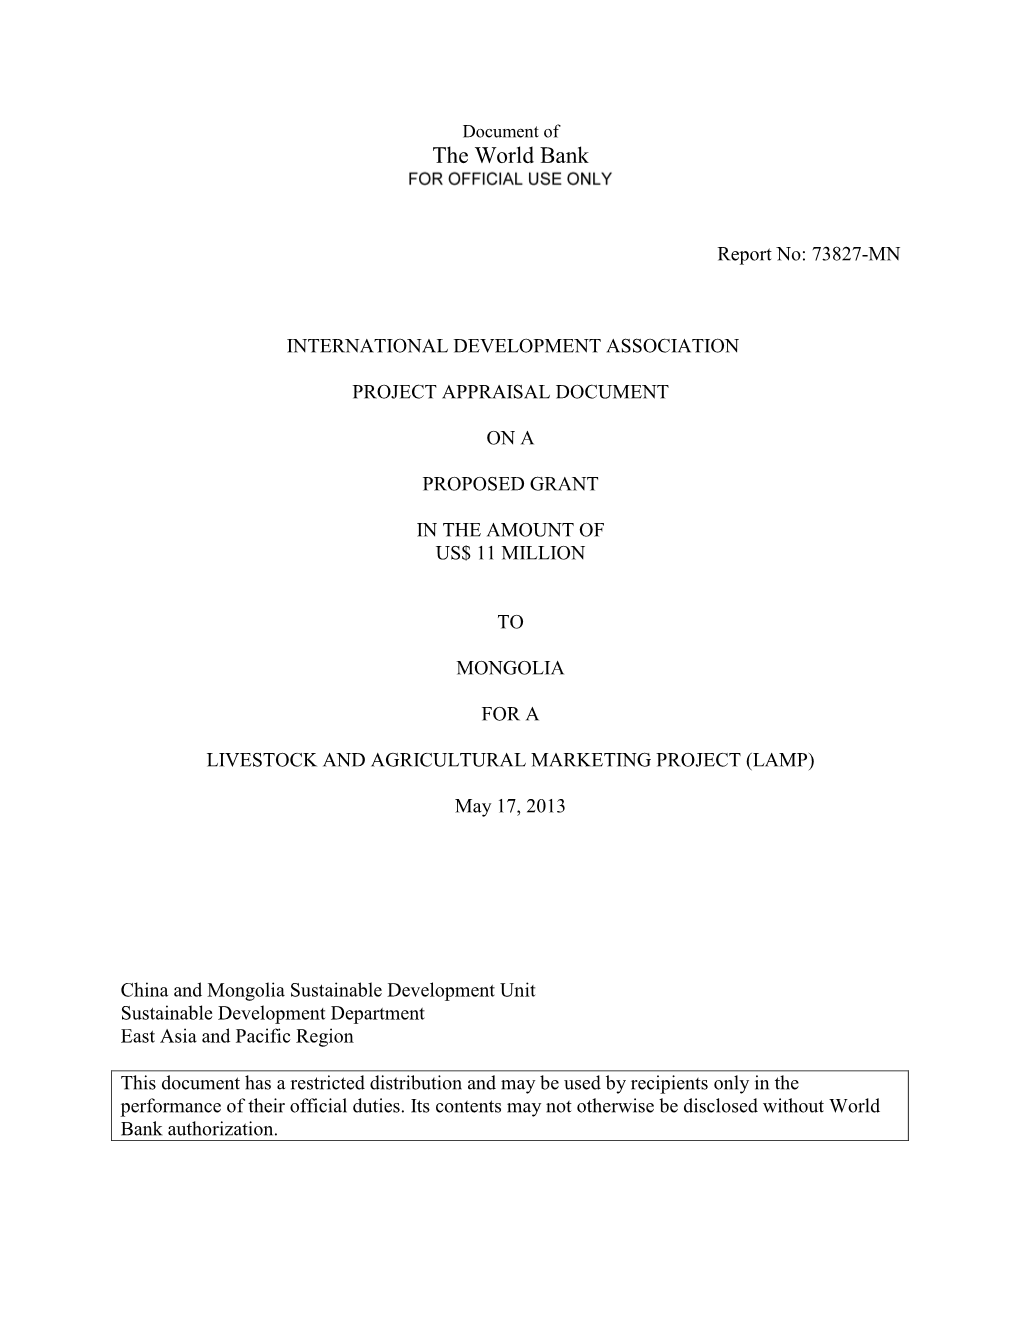 World Bank Project Appraisal Document (2013)